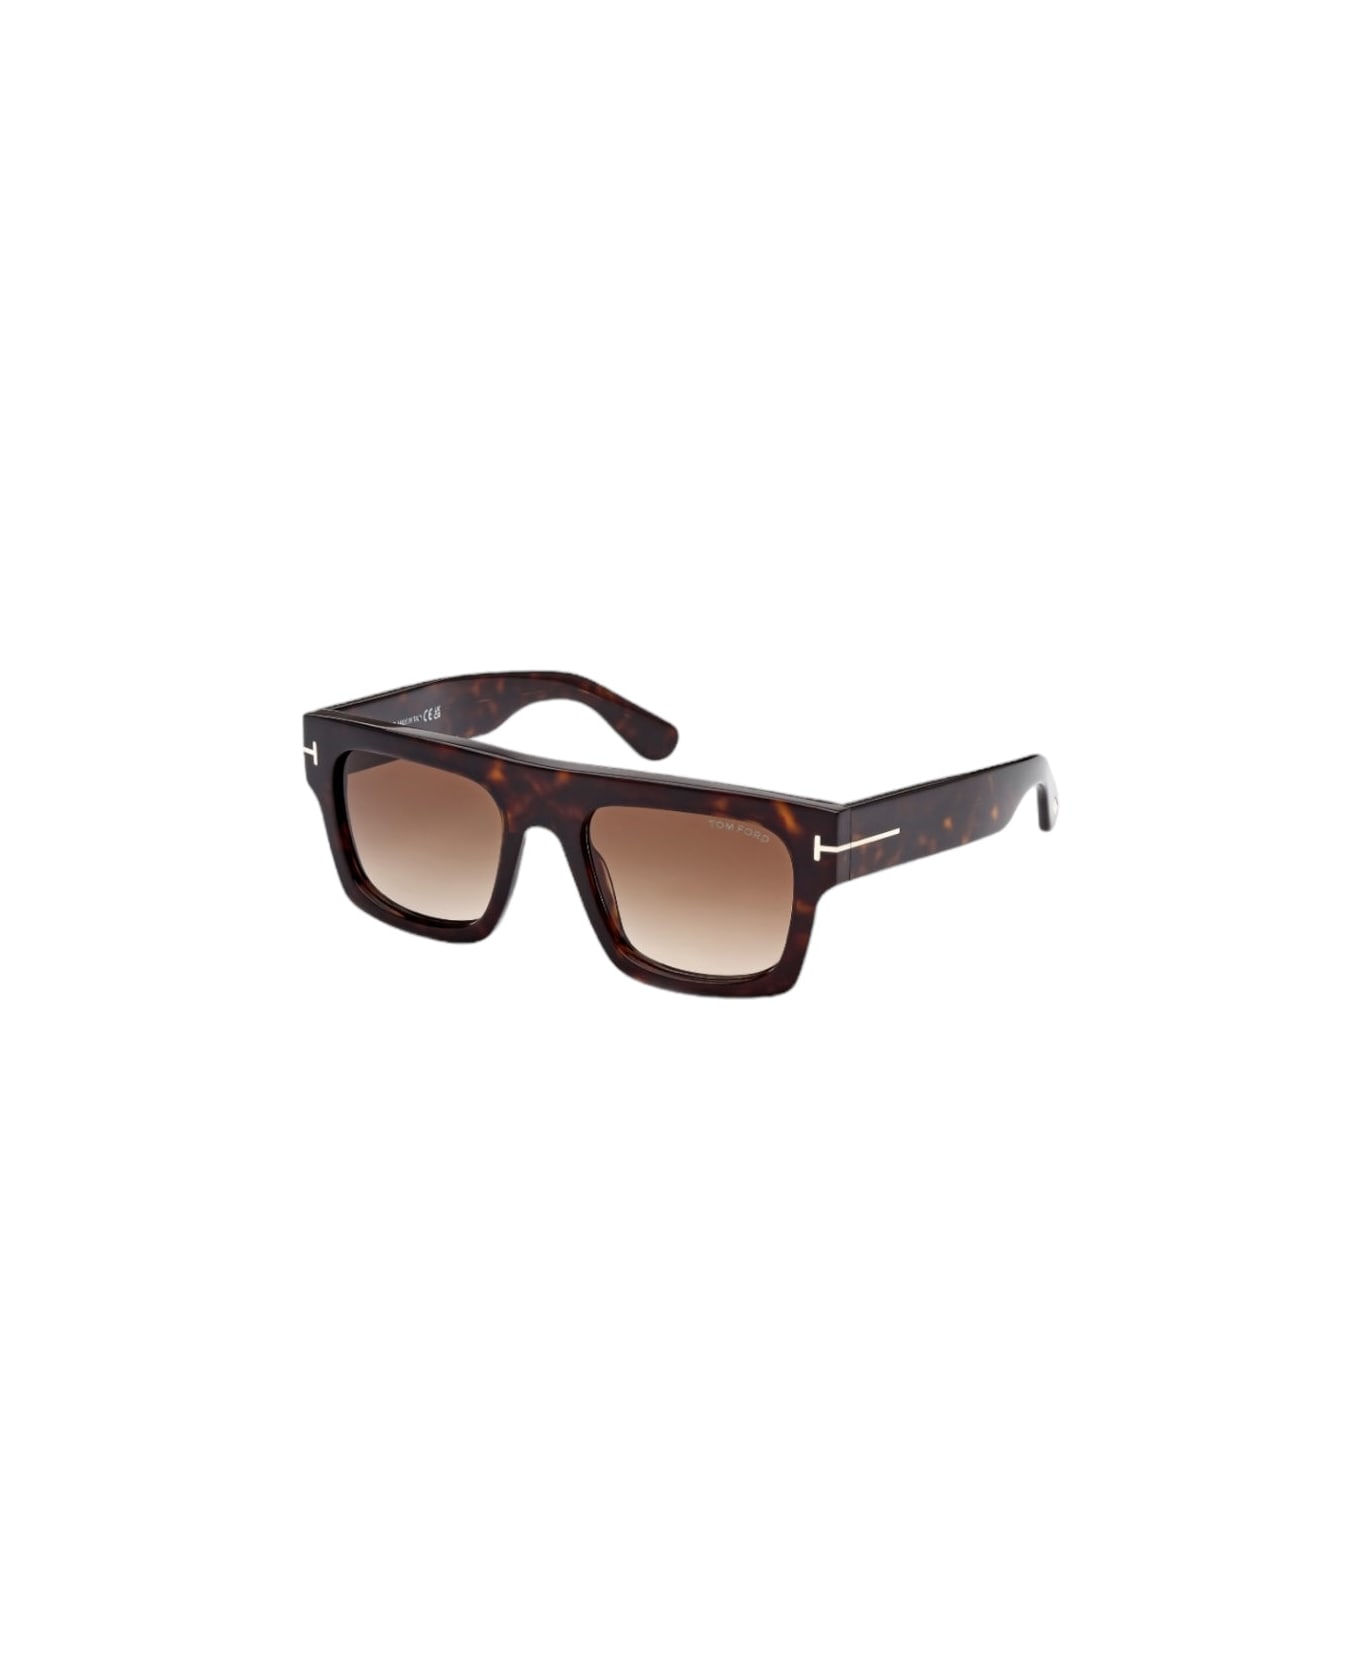 Tom Ford Eyewear Fausto - Ft 711 Sunglasses